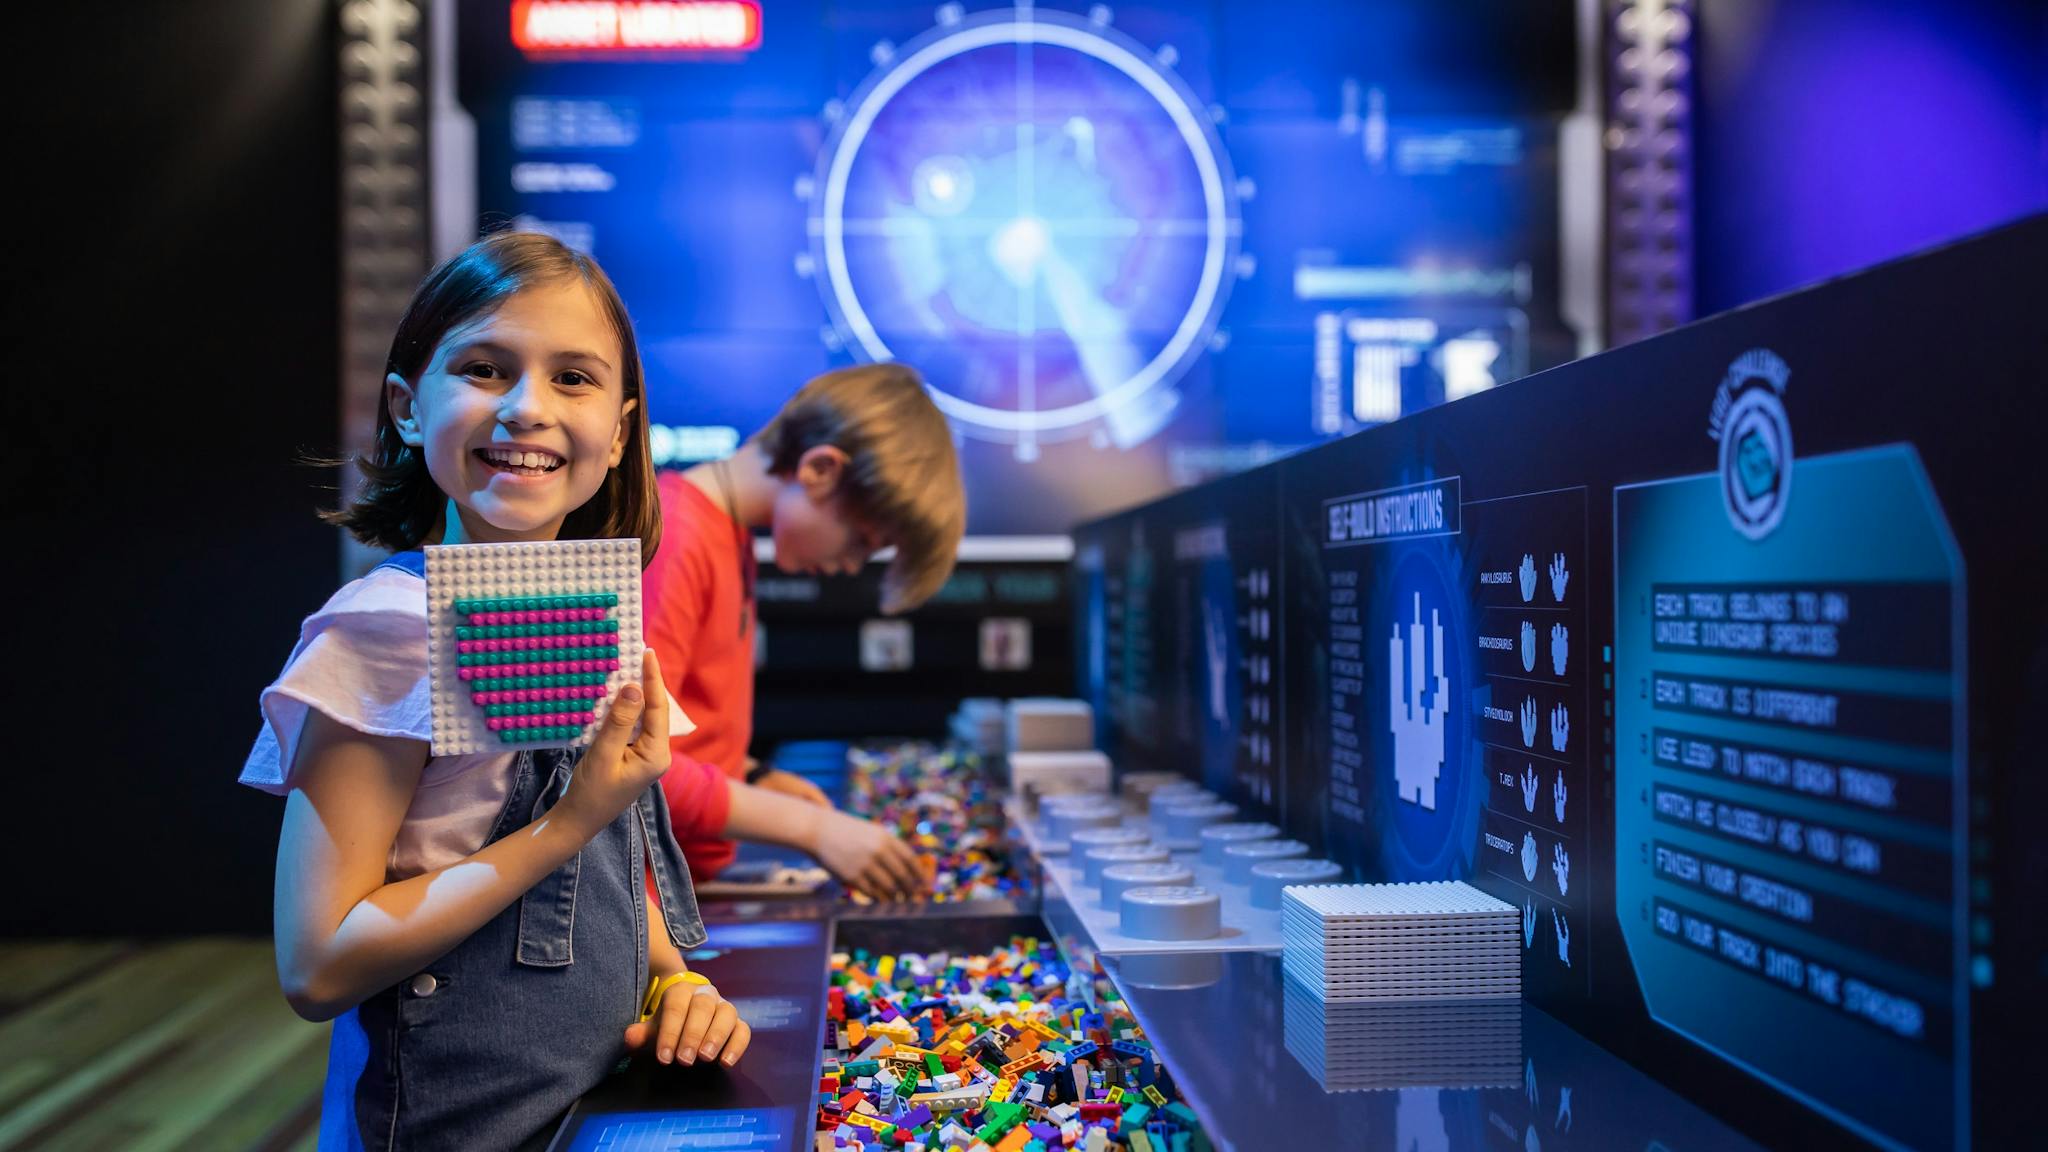 Two children build with LEGO bricks